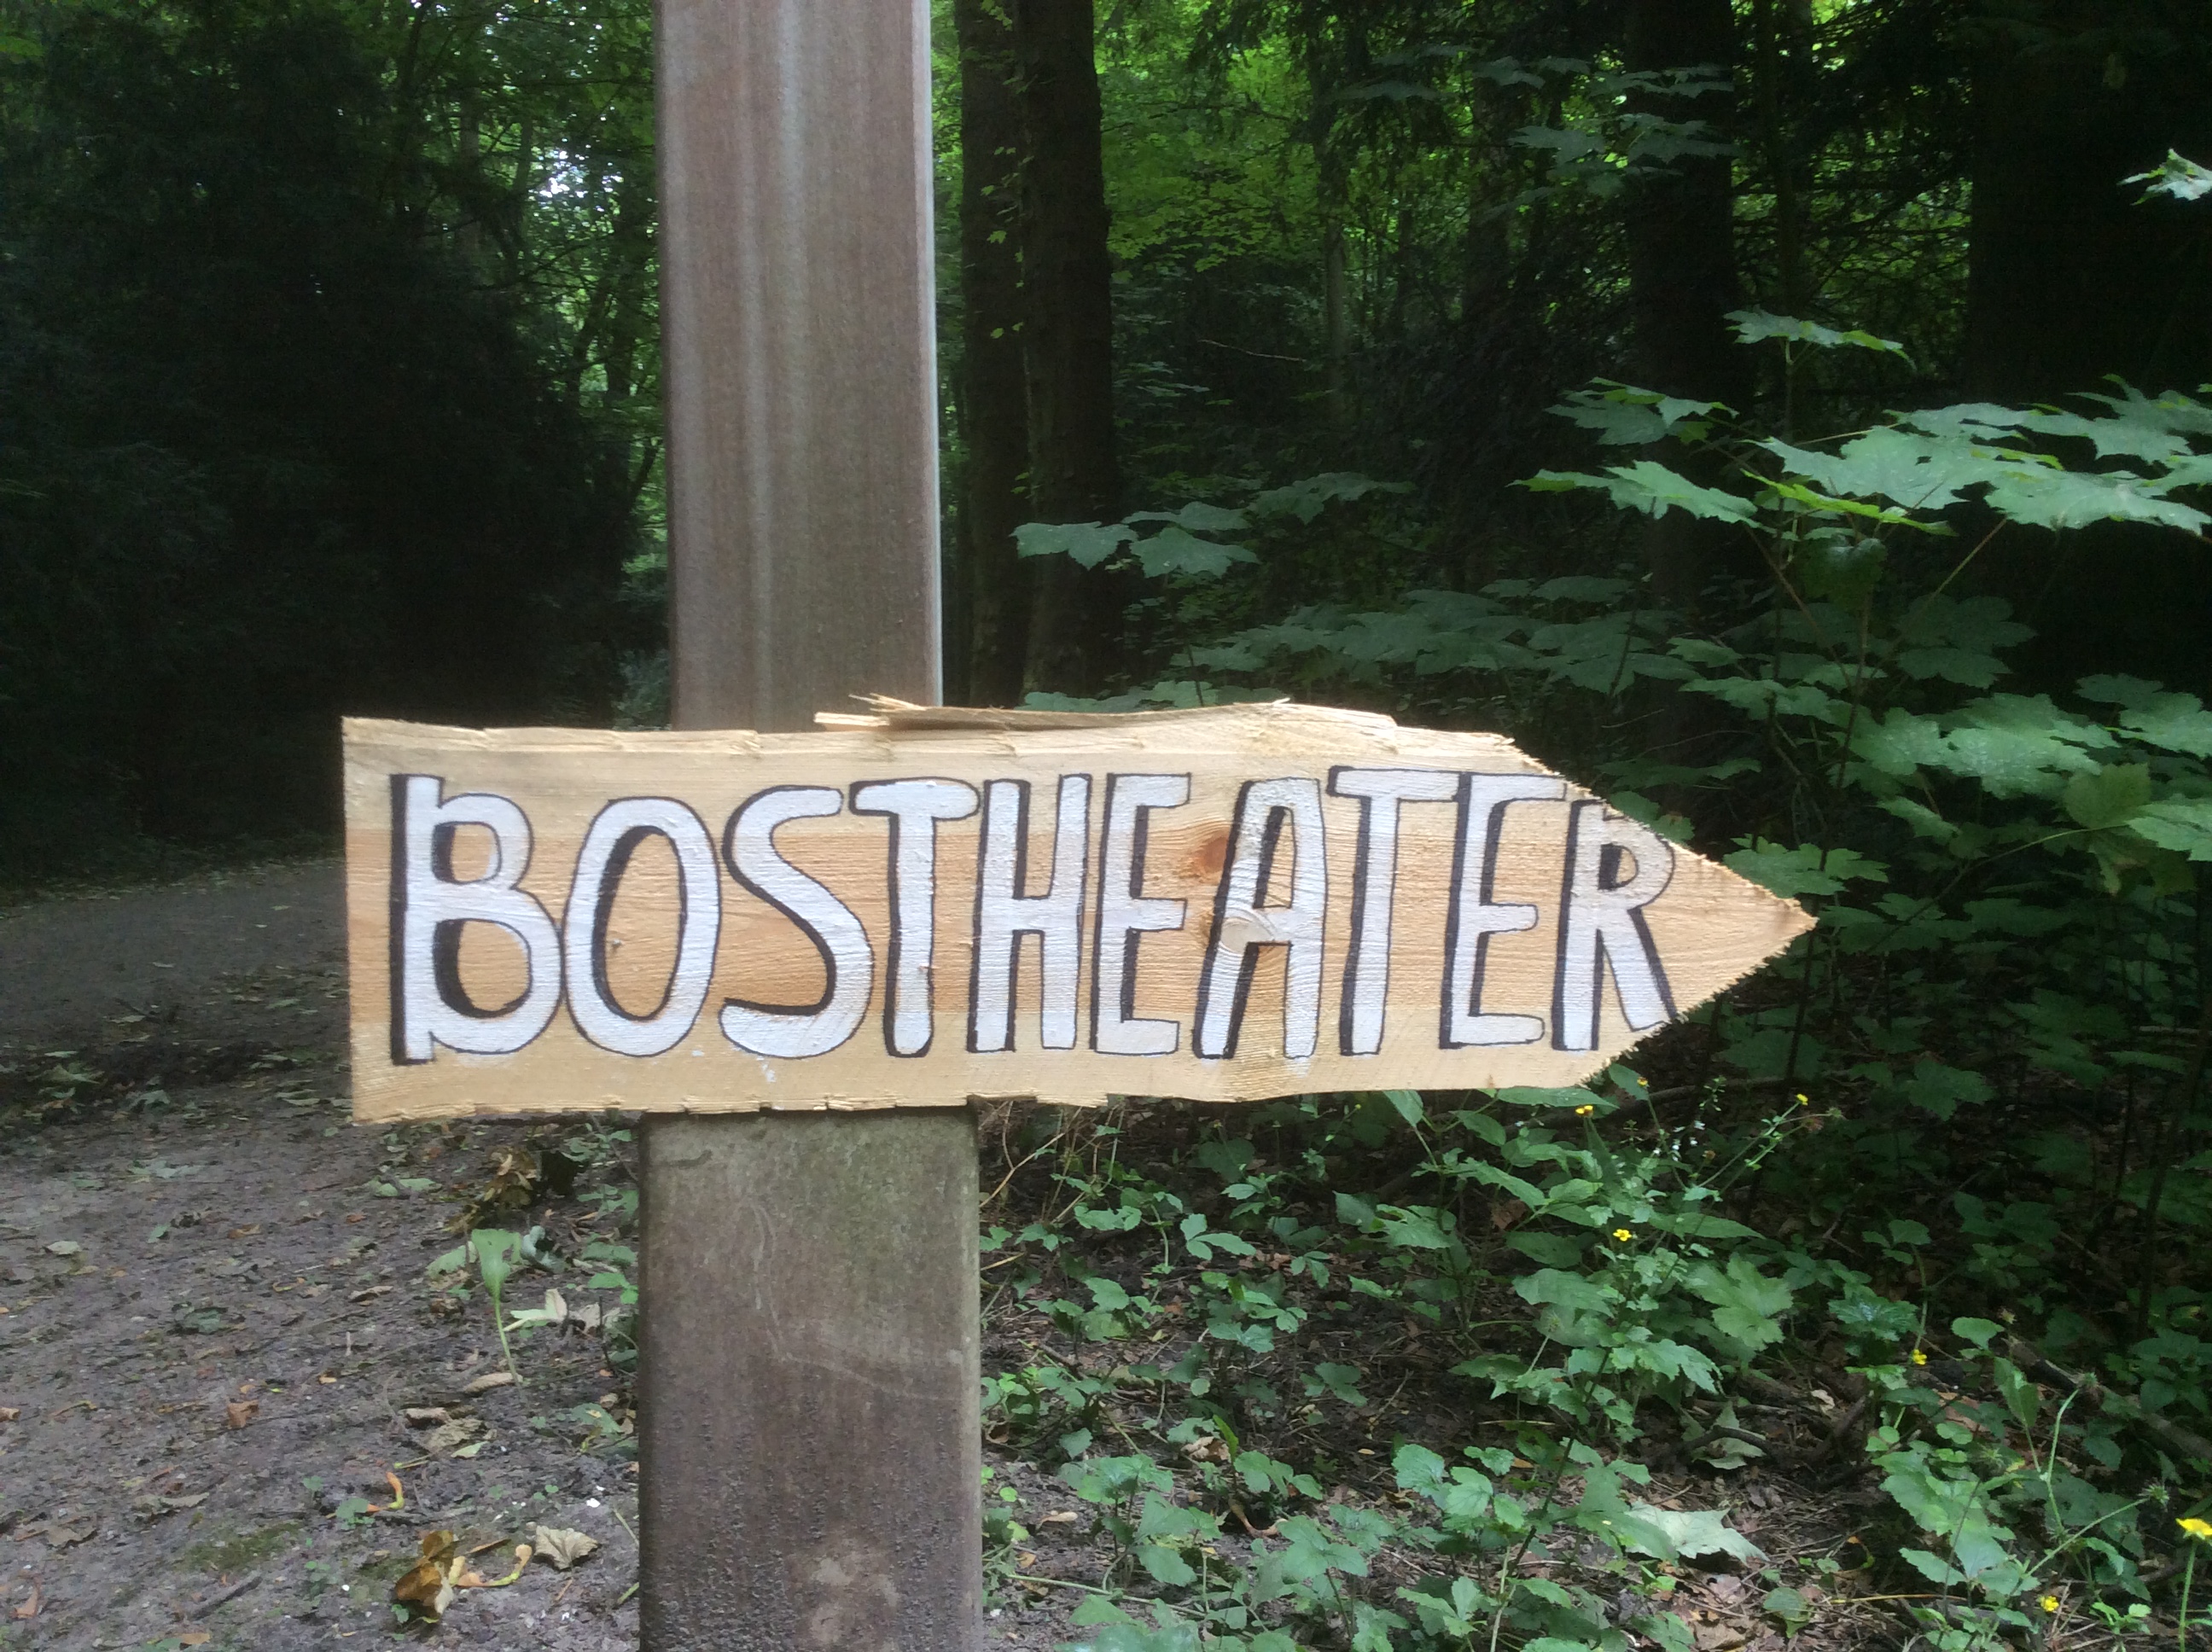 Bostheater